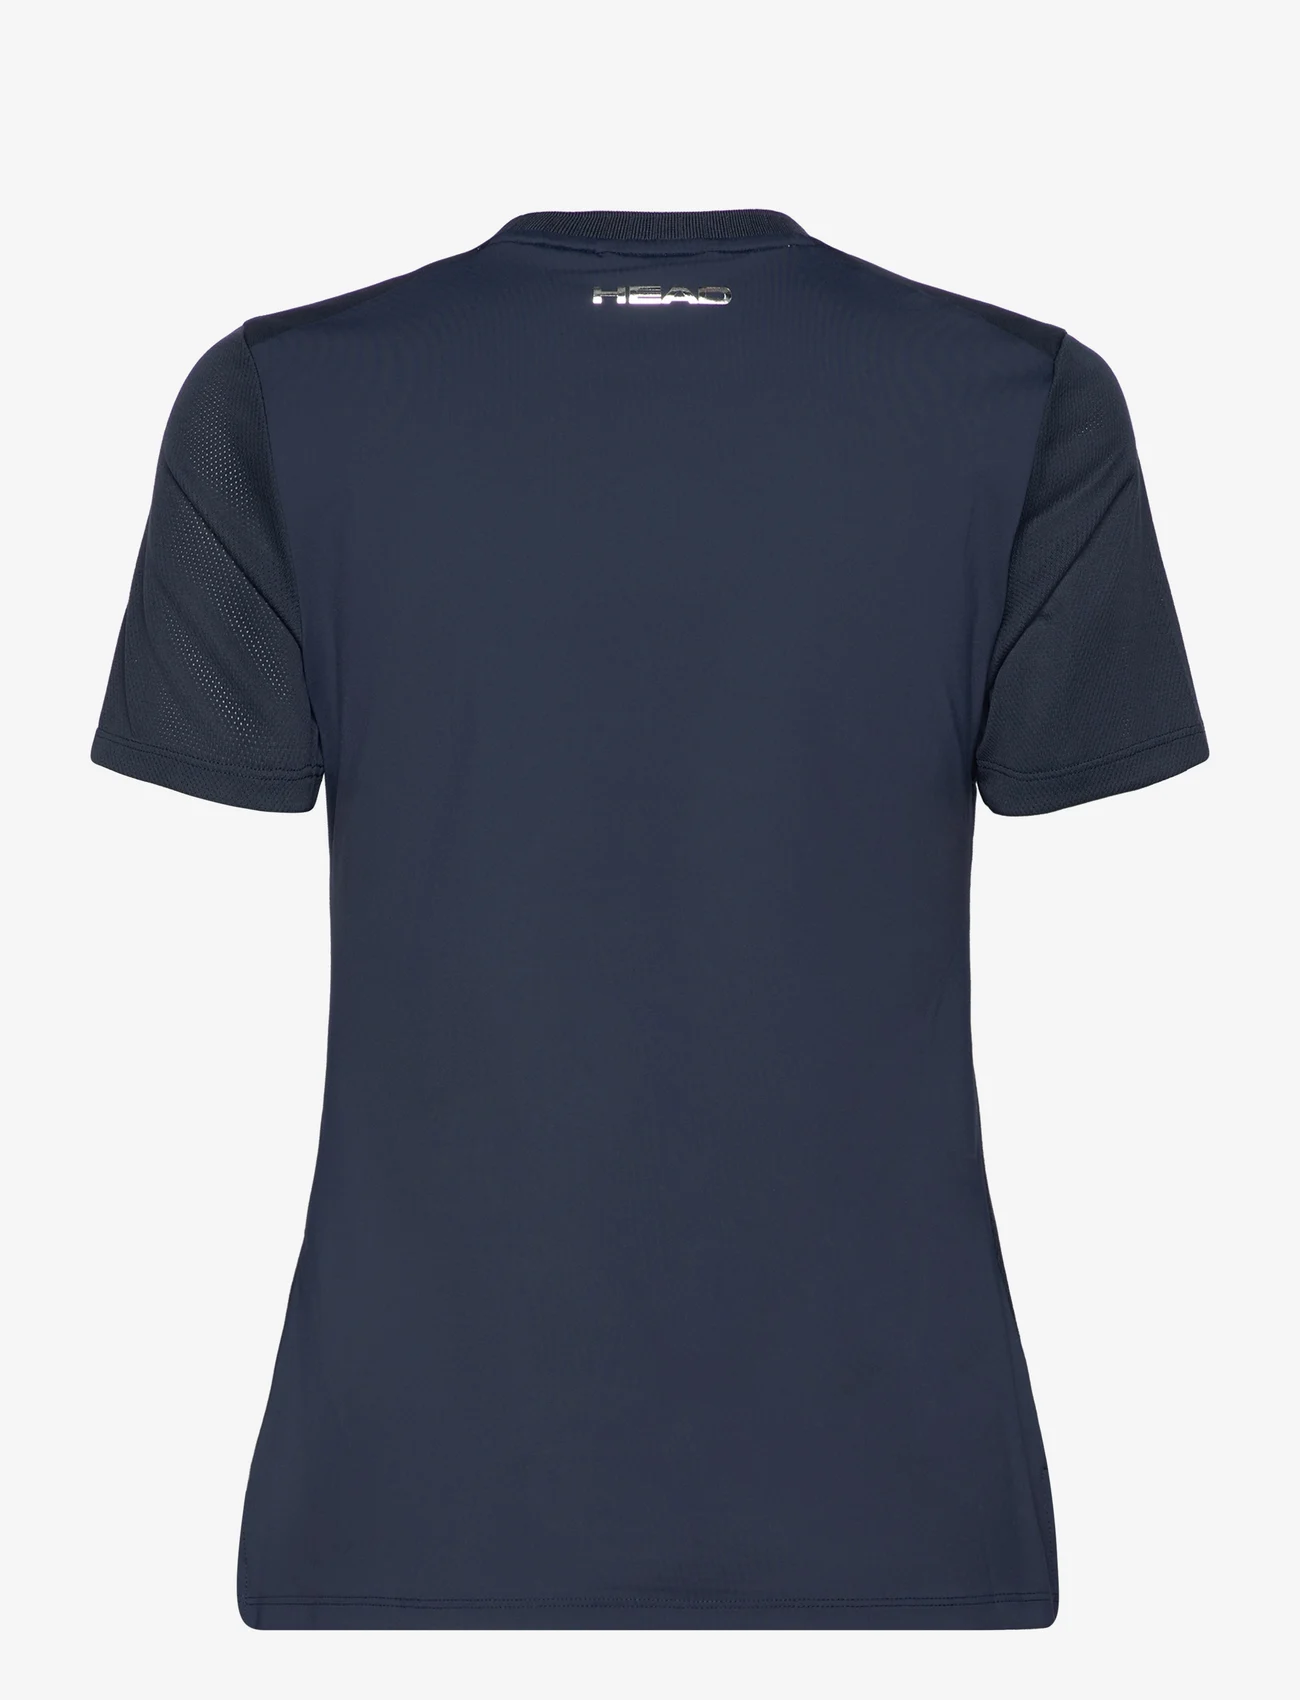 Head - PERFORMANCE T-Shirt Women - t-shirts - navy - 1